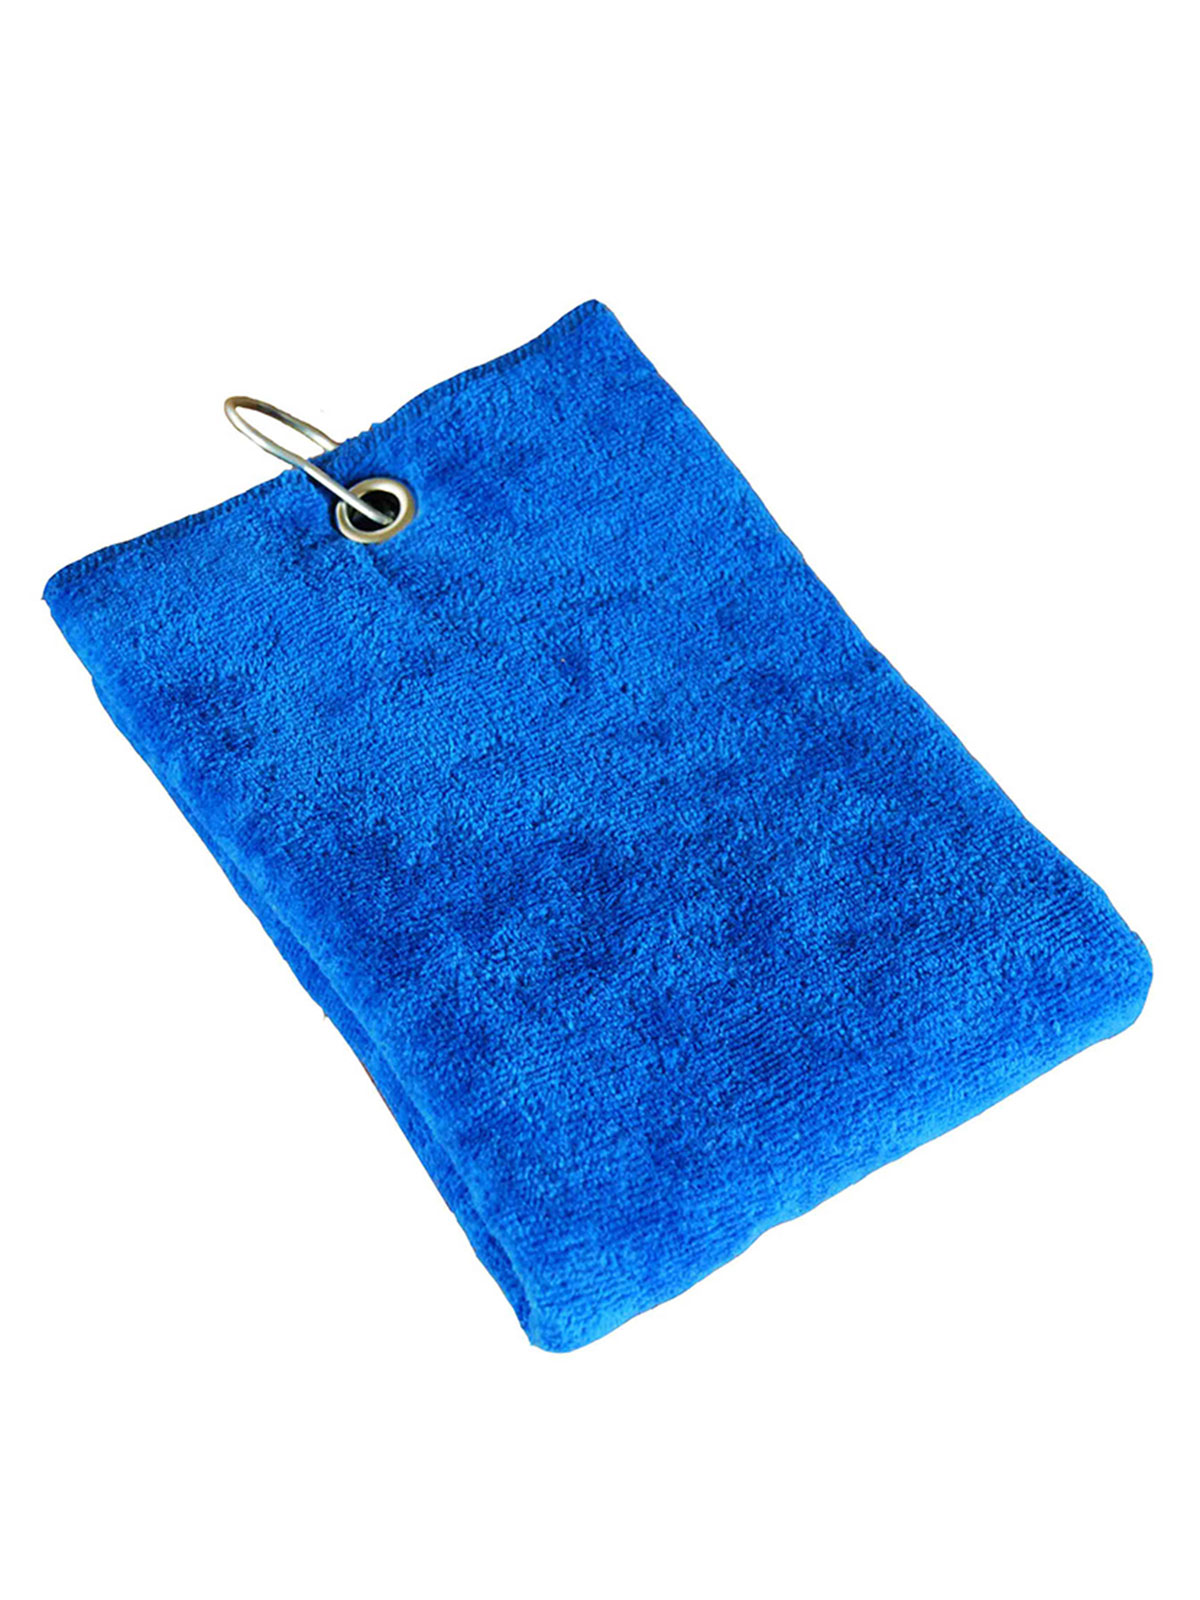 golf-towel-45x45-royal-blue.webp